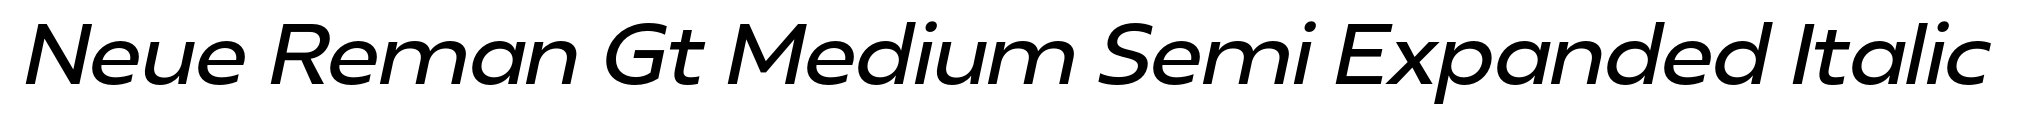 Neue Reman Gt Medium Semi Expanded Italic image